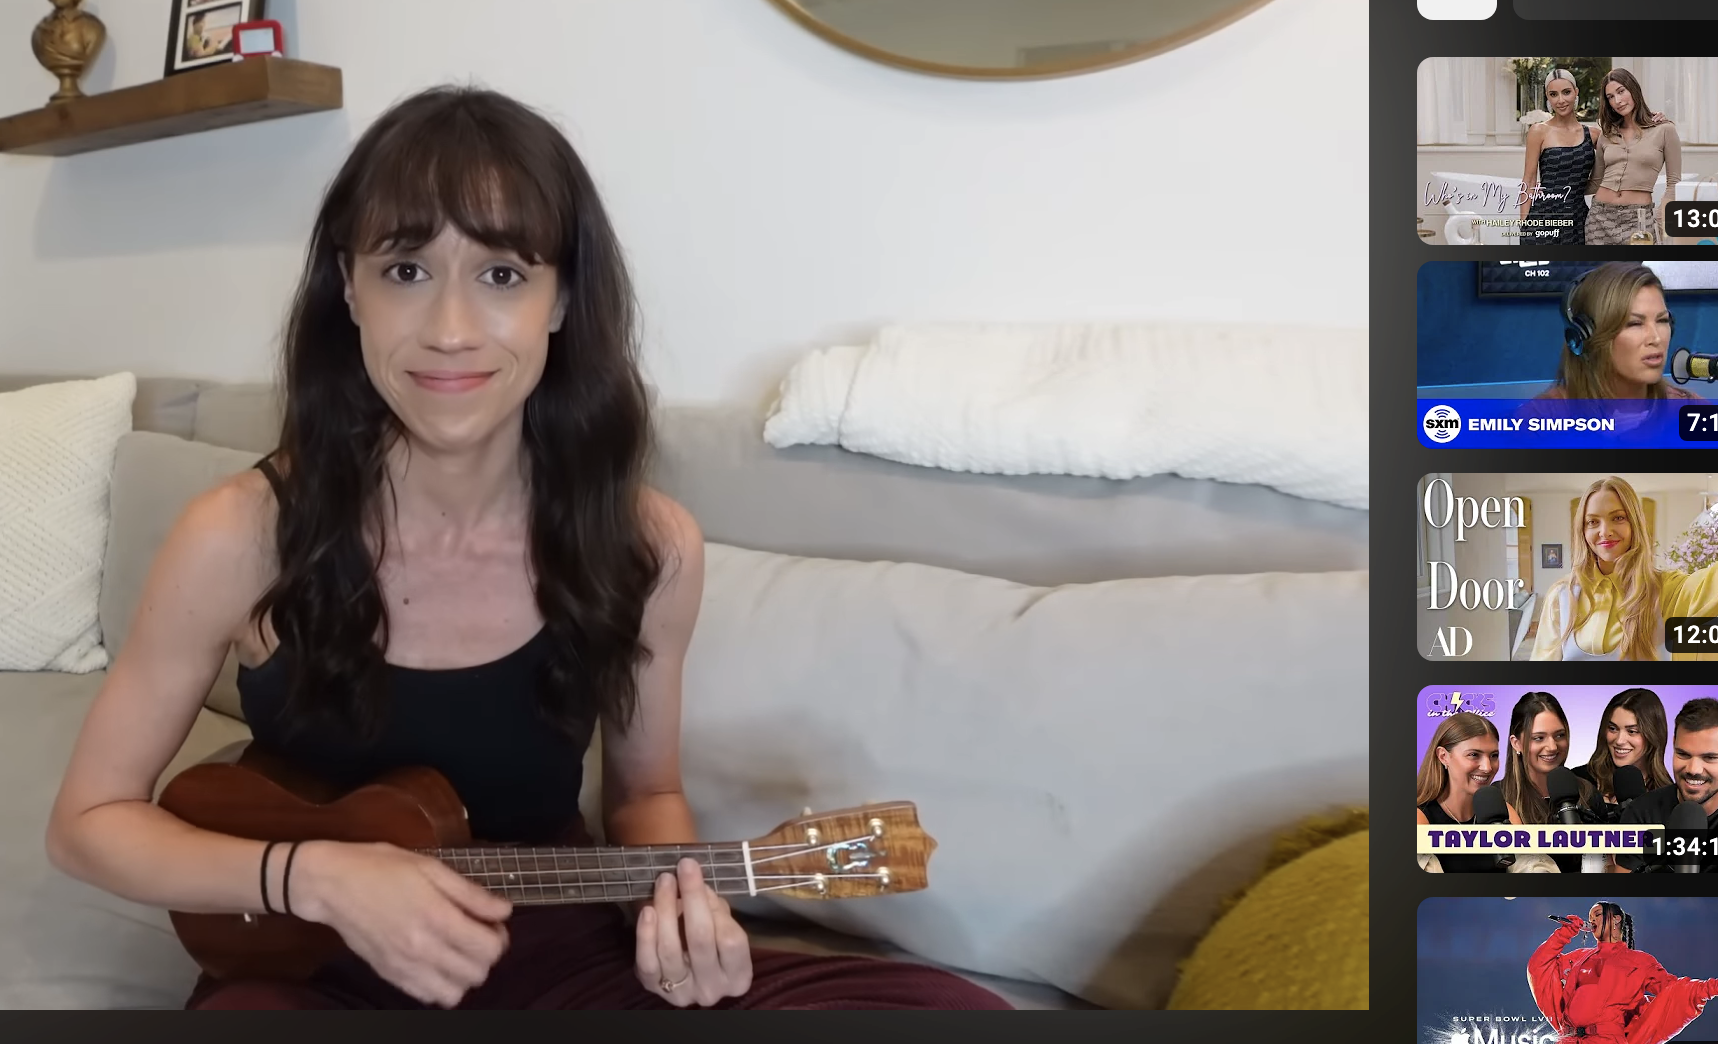 Closeup of Colleen playing the ukulele